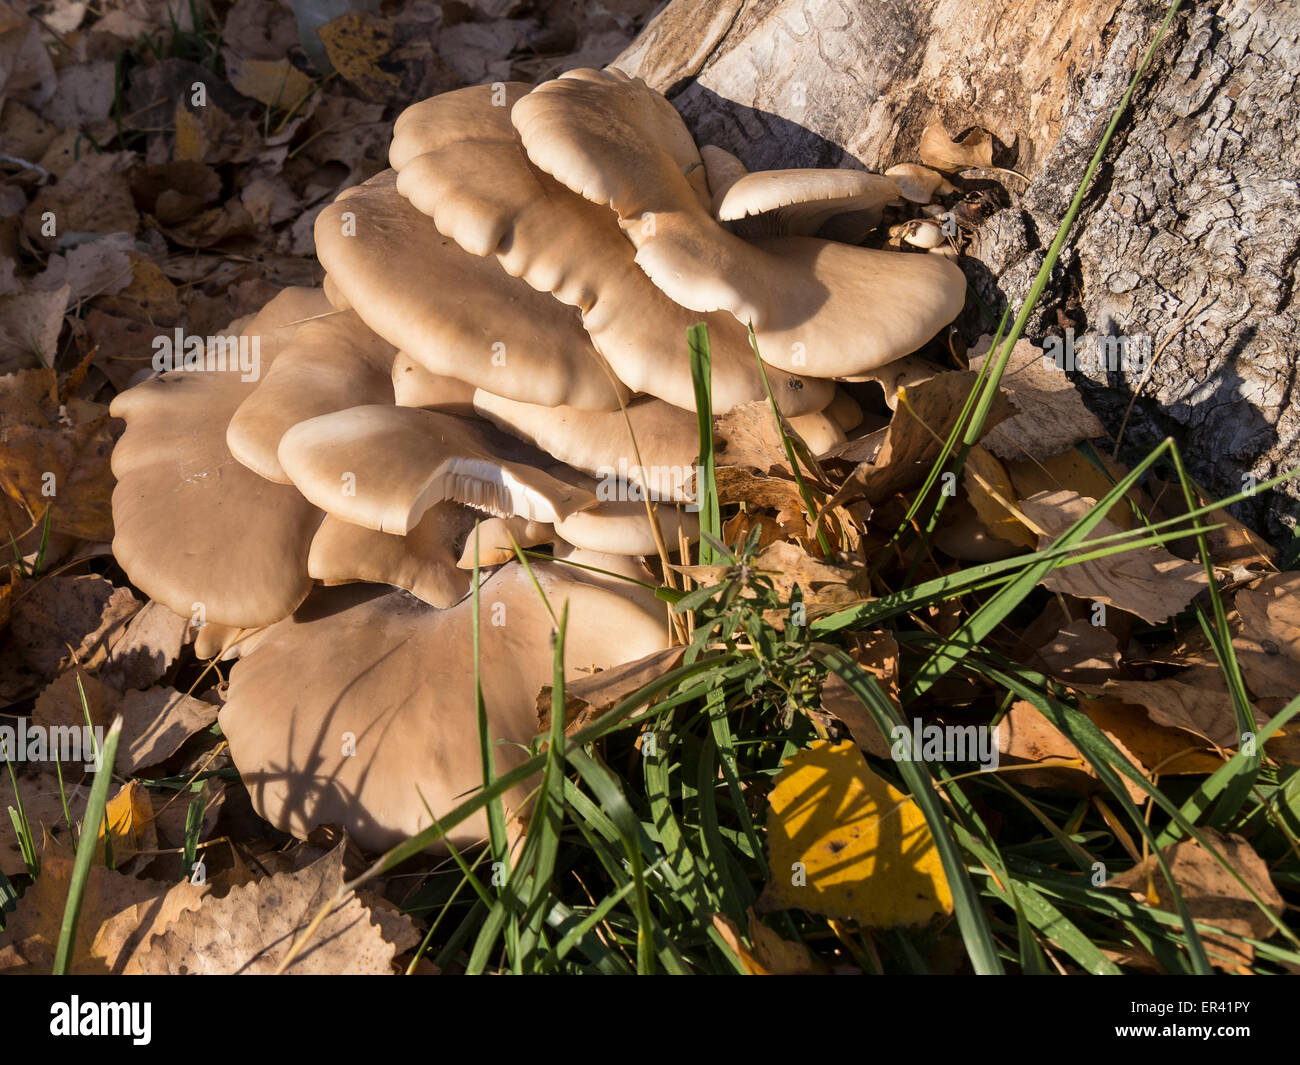 Fungi on Cottonwood tree, Fall, Cherry Creek State Park Campground, Aurora, Colorado. Stock Photo